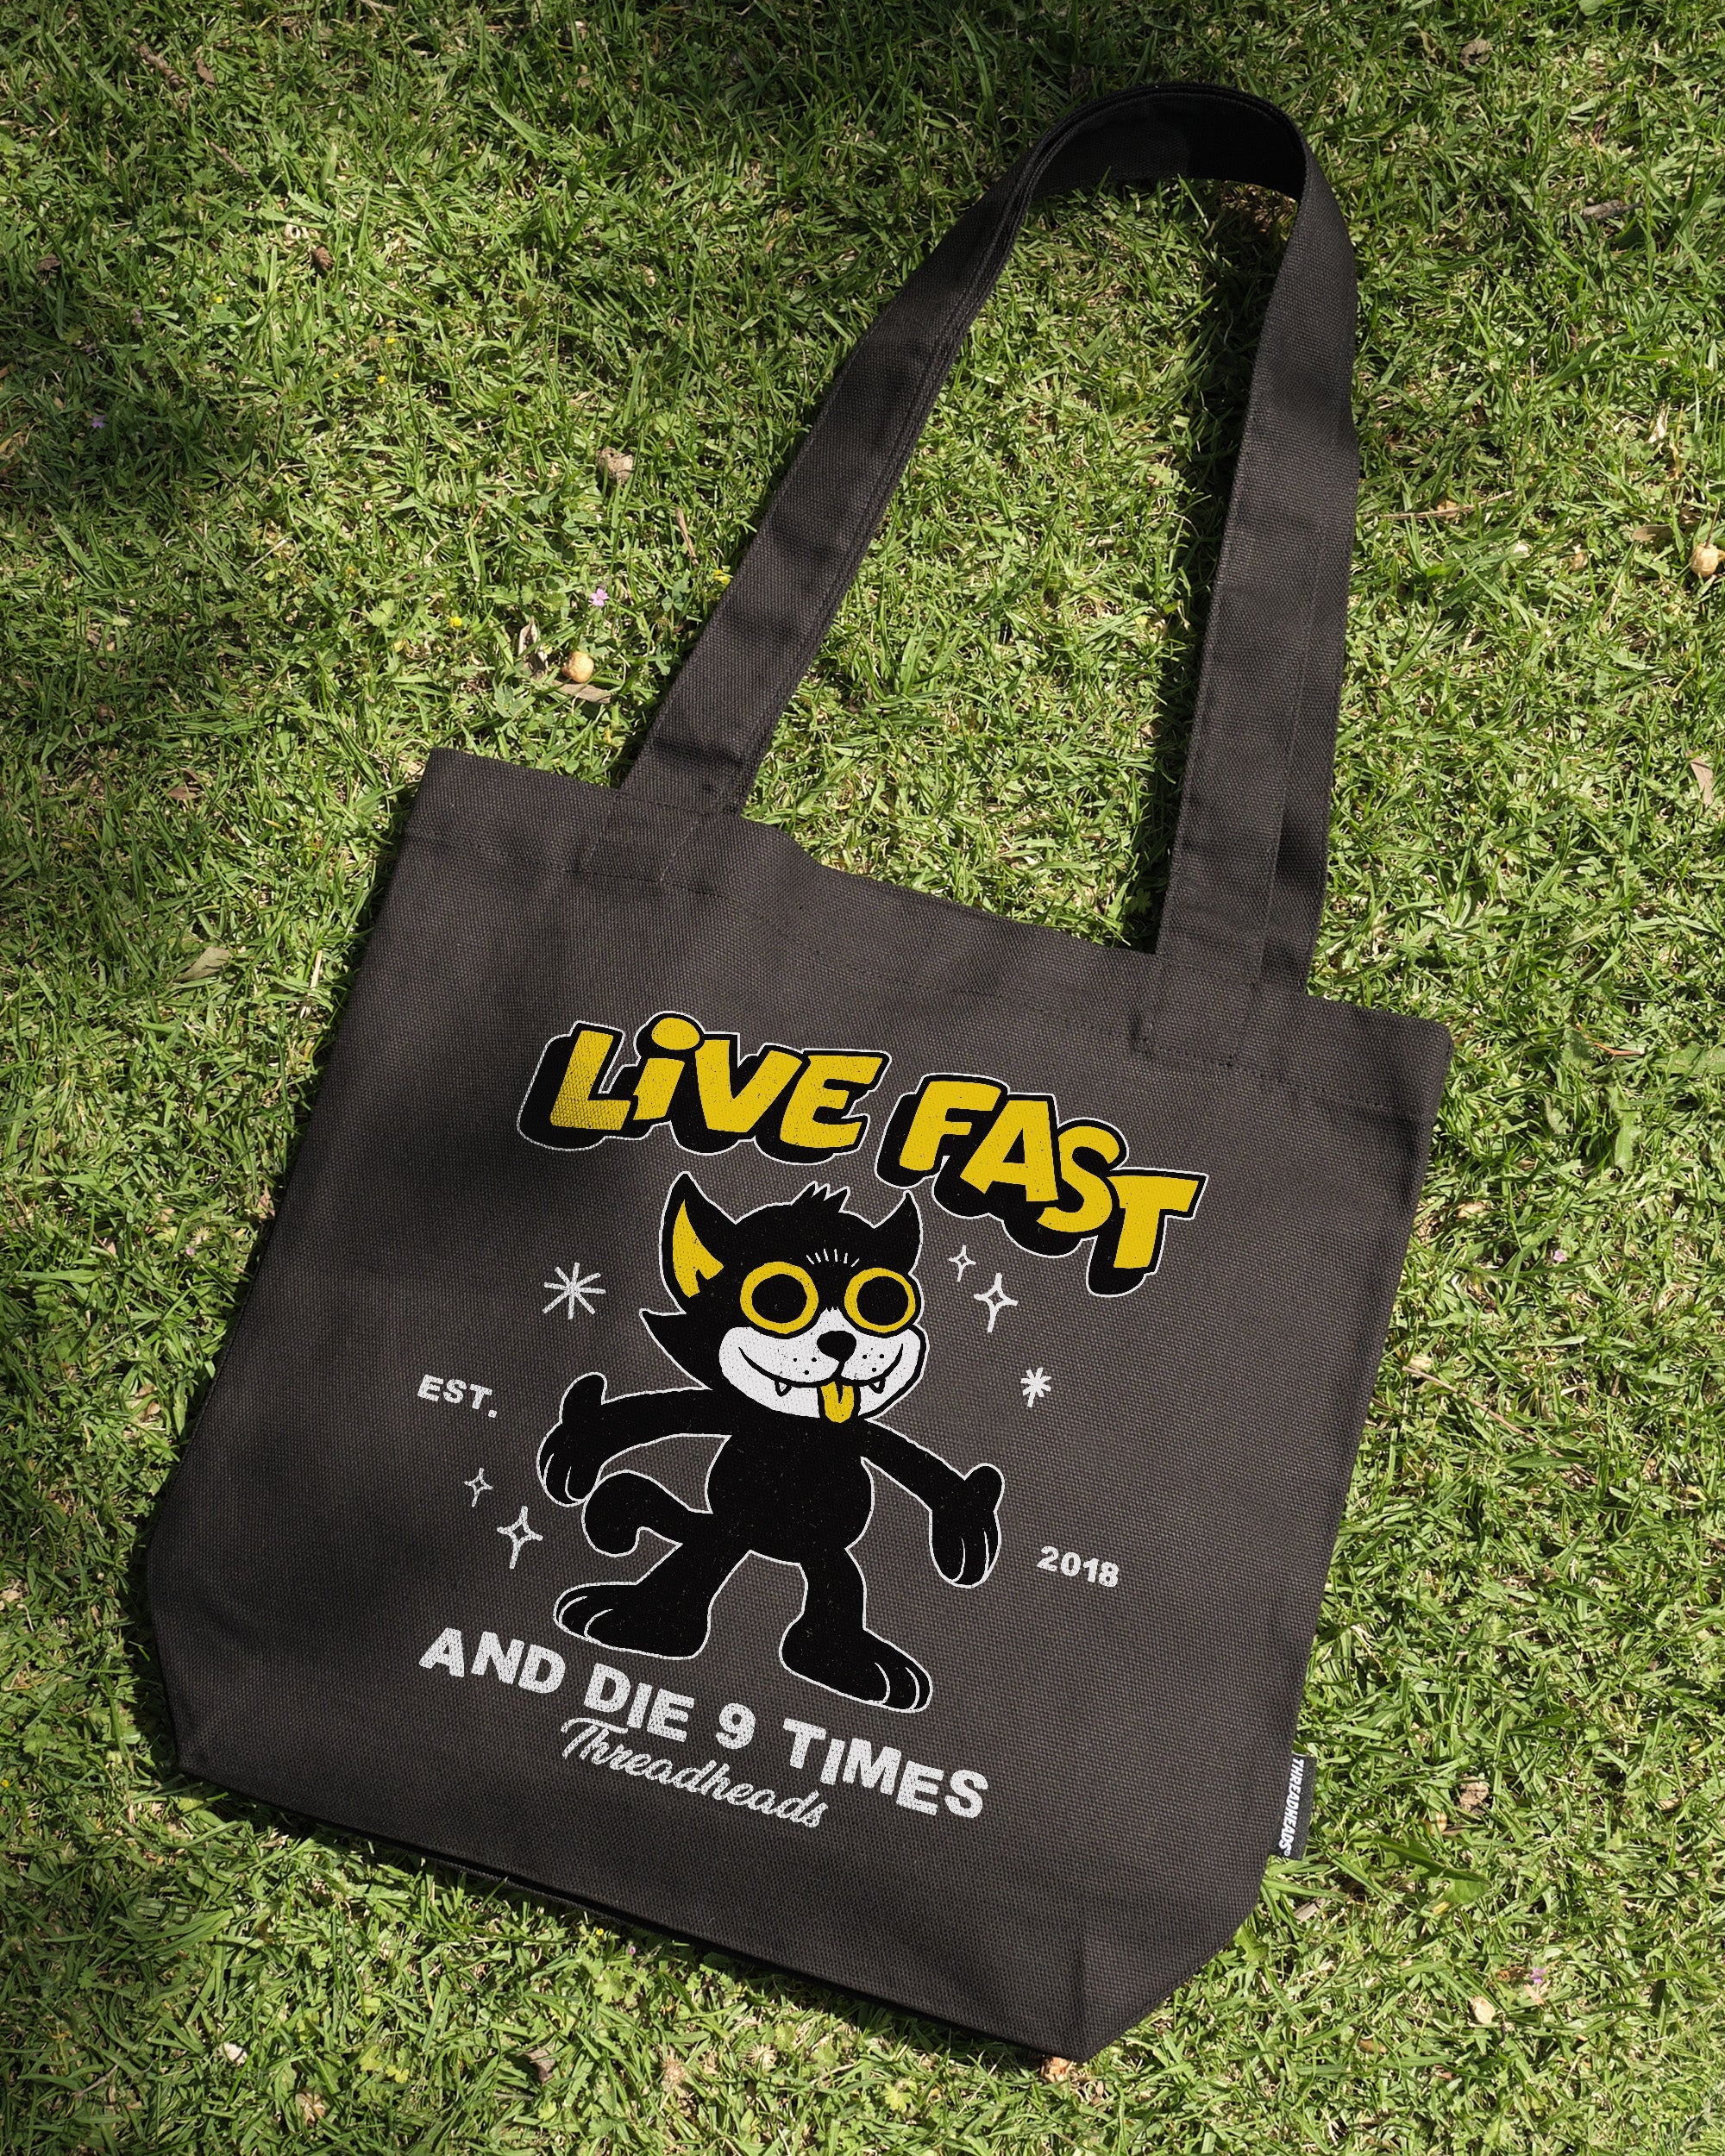 Live Fast and Die Nine Times Tote Bag Australia Online Black